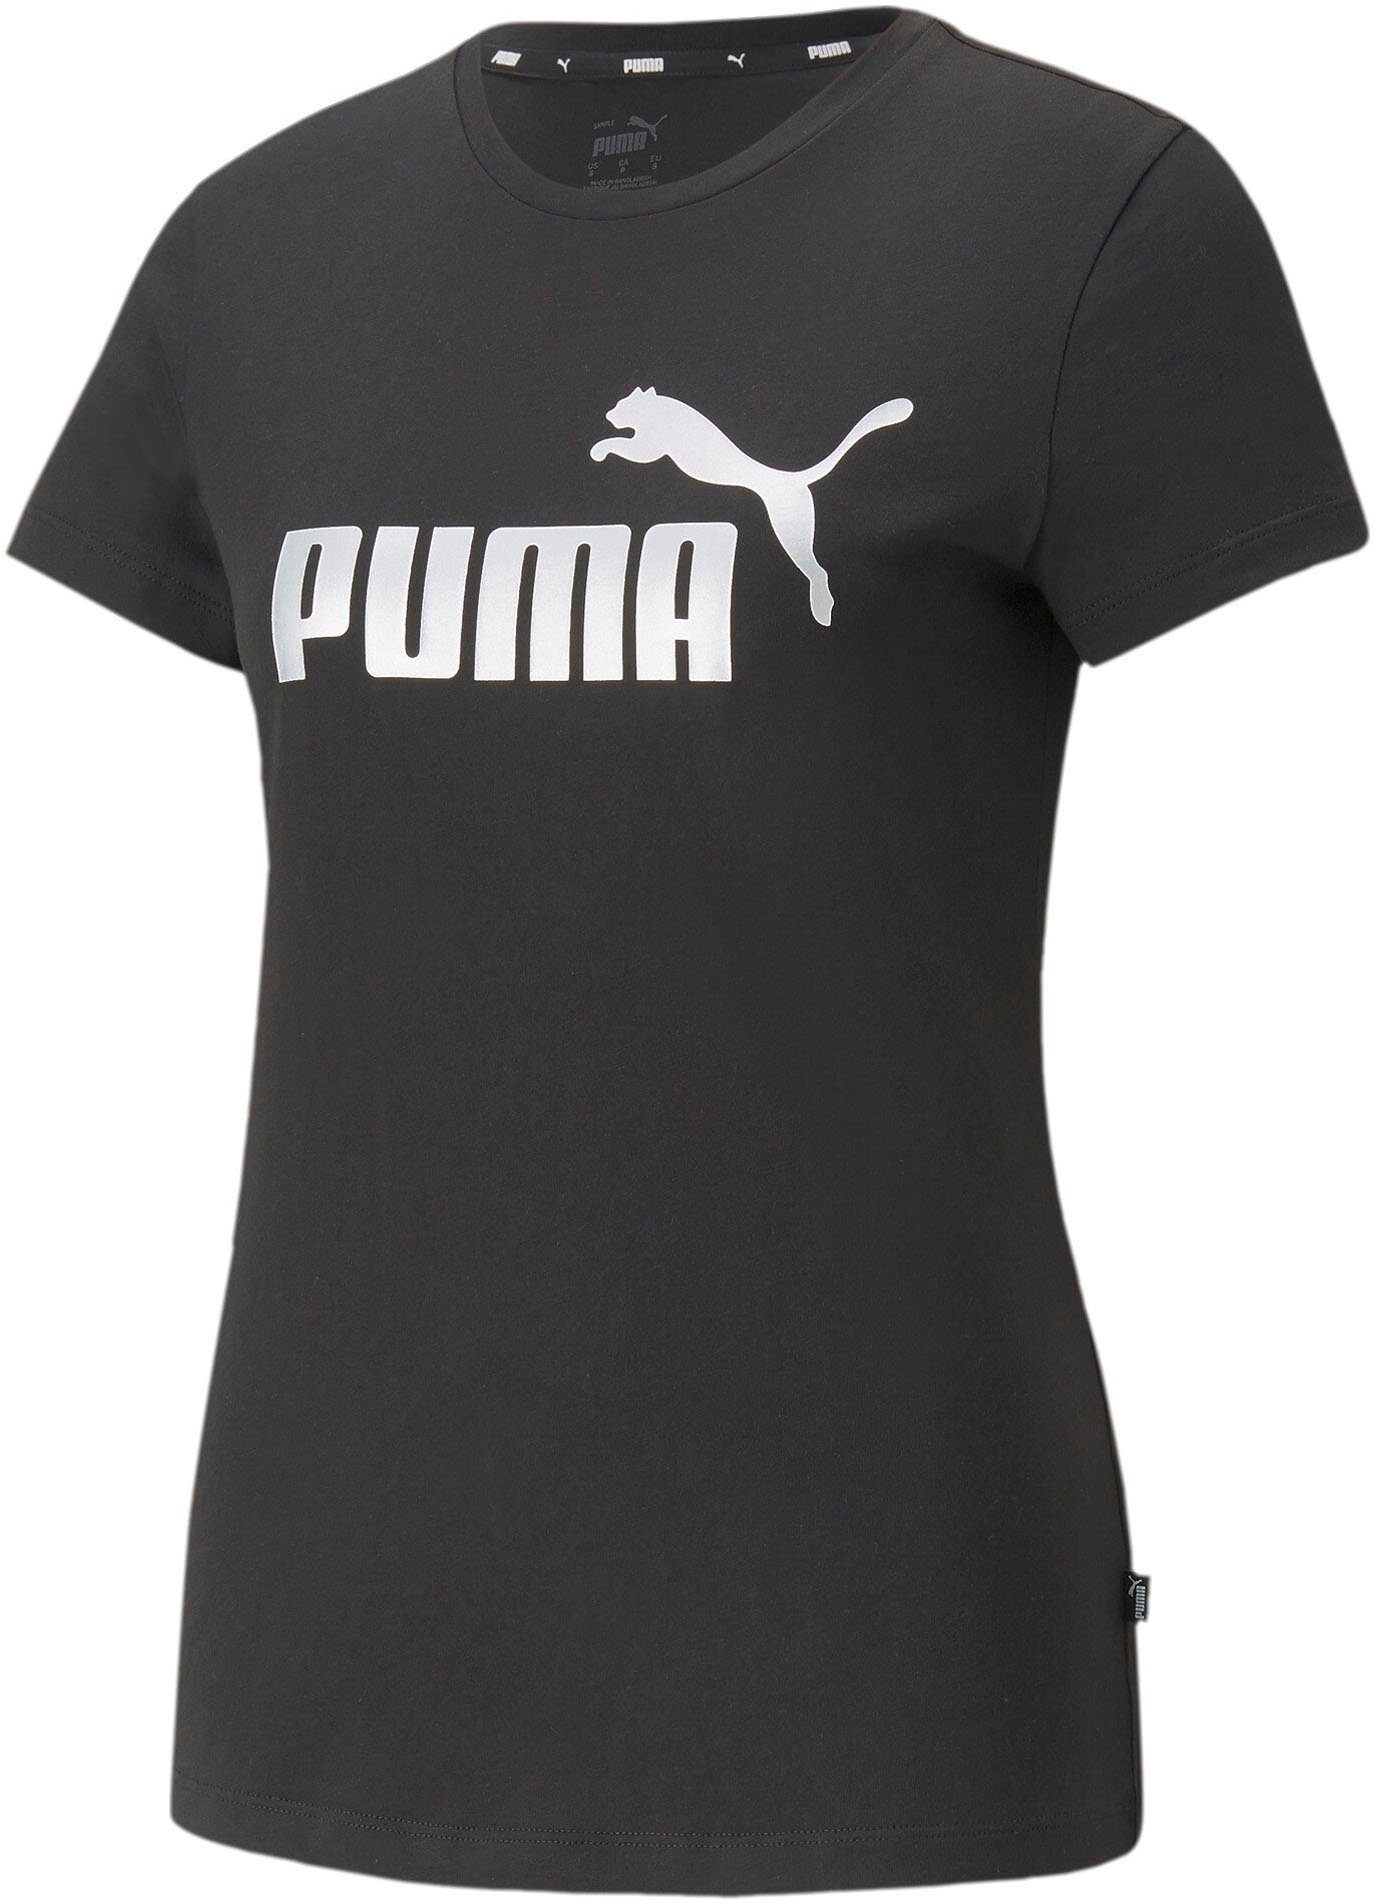 metallic TEE PUMA LOGO ESS+ Black-silver METALLIC Puma T-Shirt